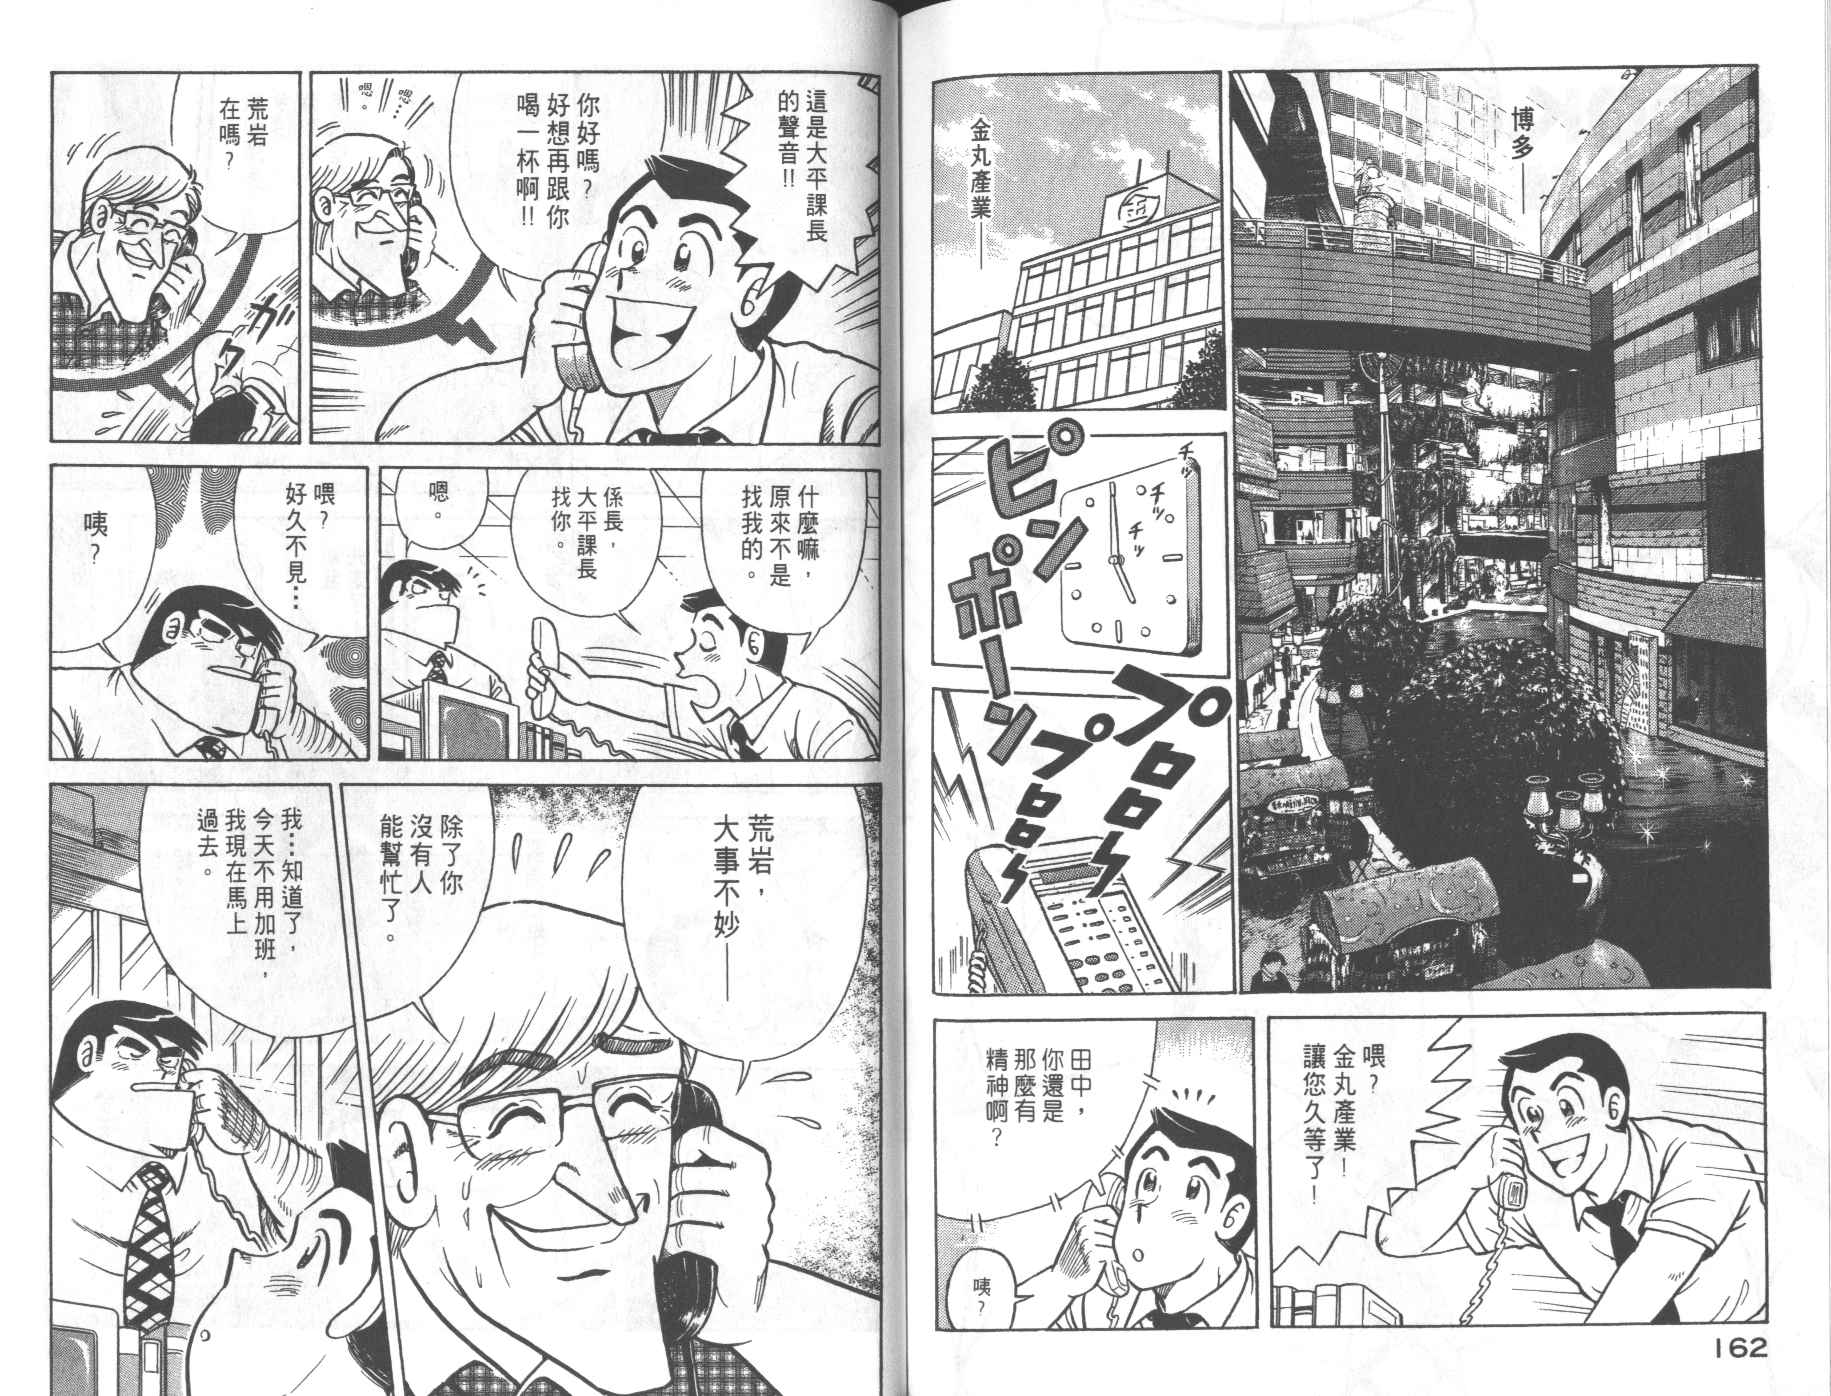 妙廚老爹 - 第68卷(2/2) - 2